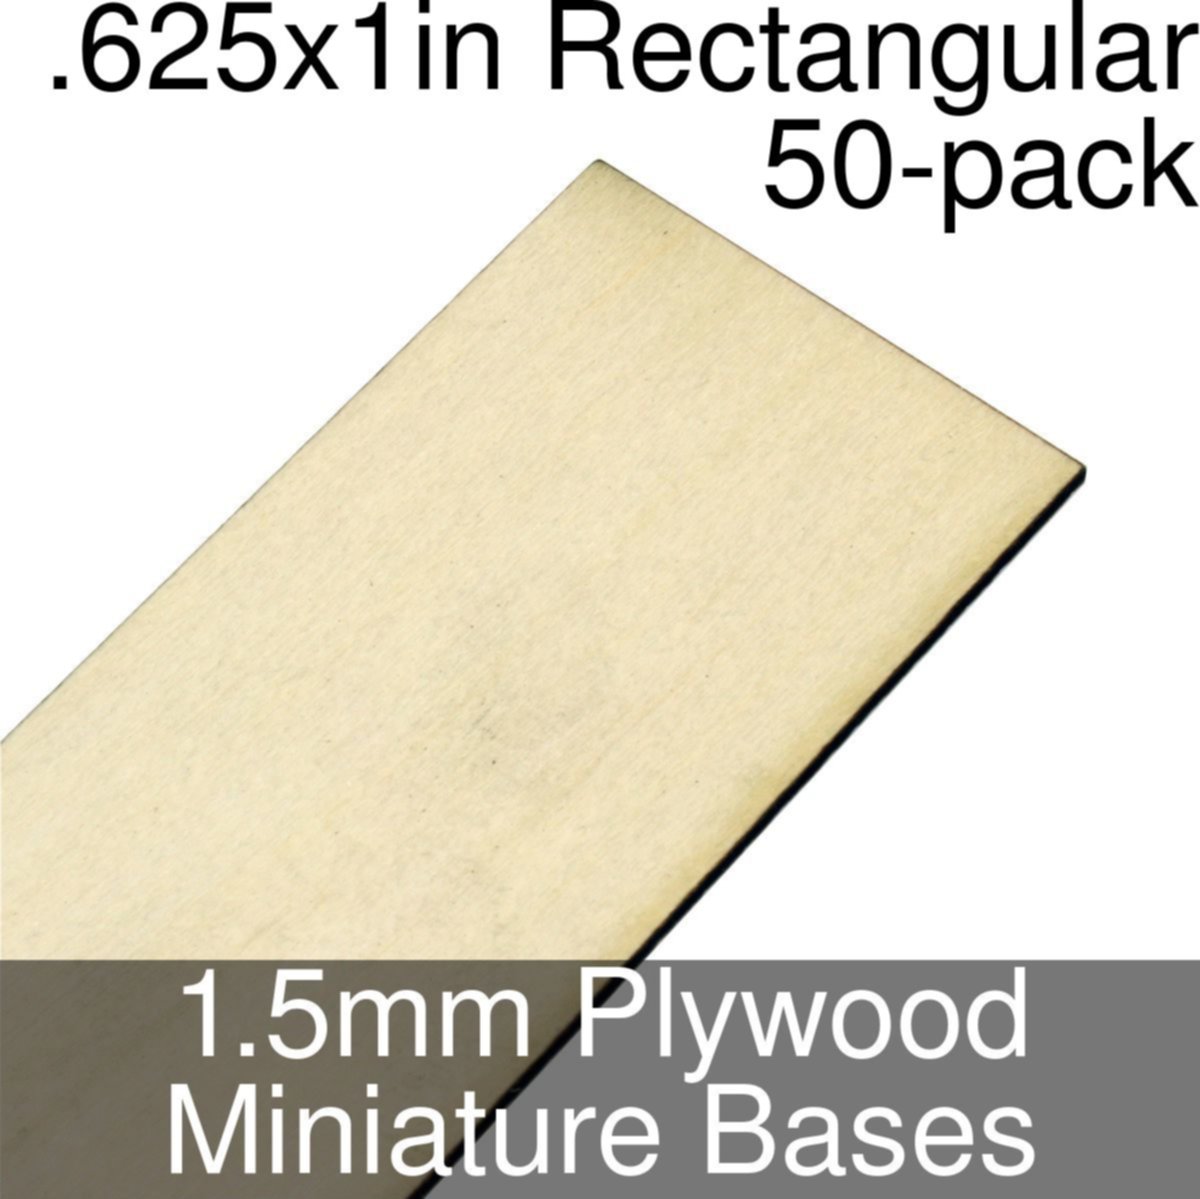 .625x1-inch rectangular miniature bases